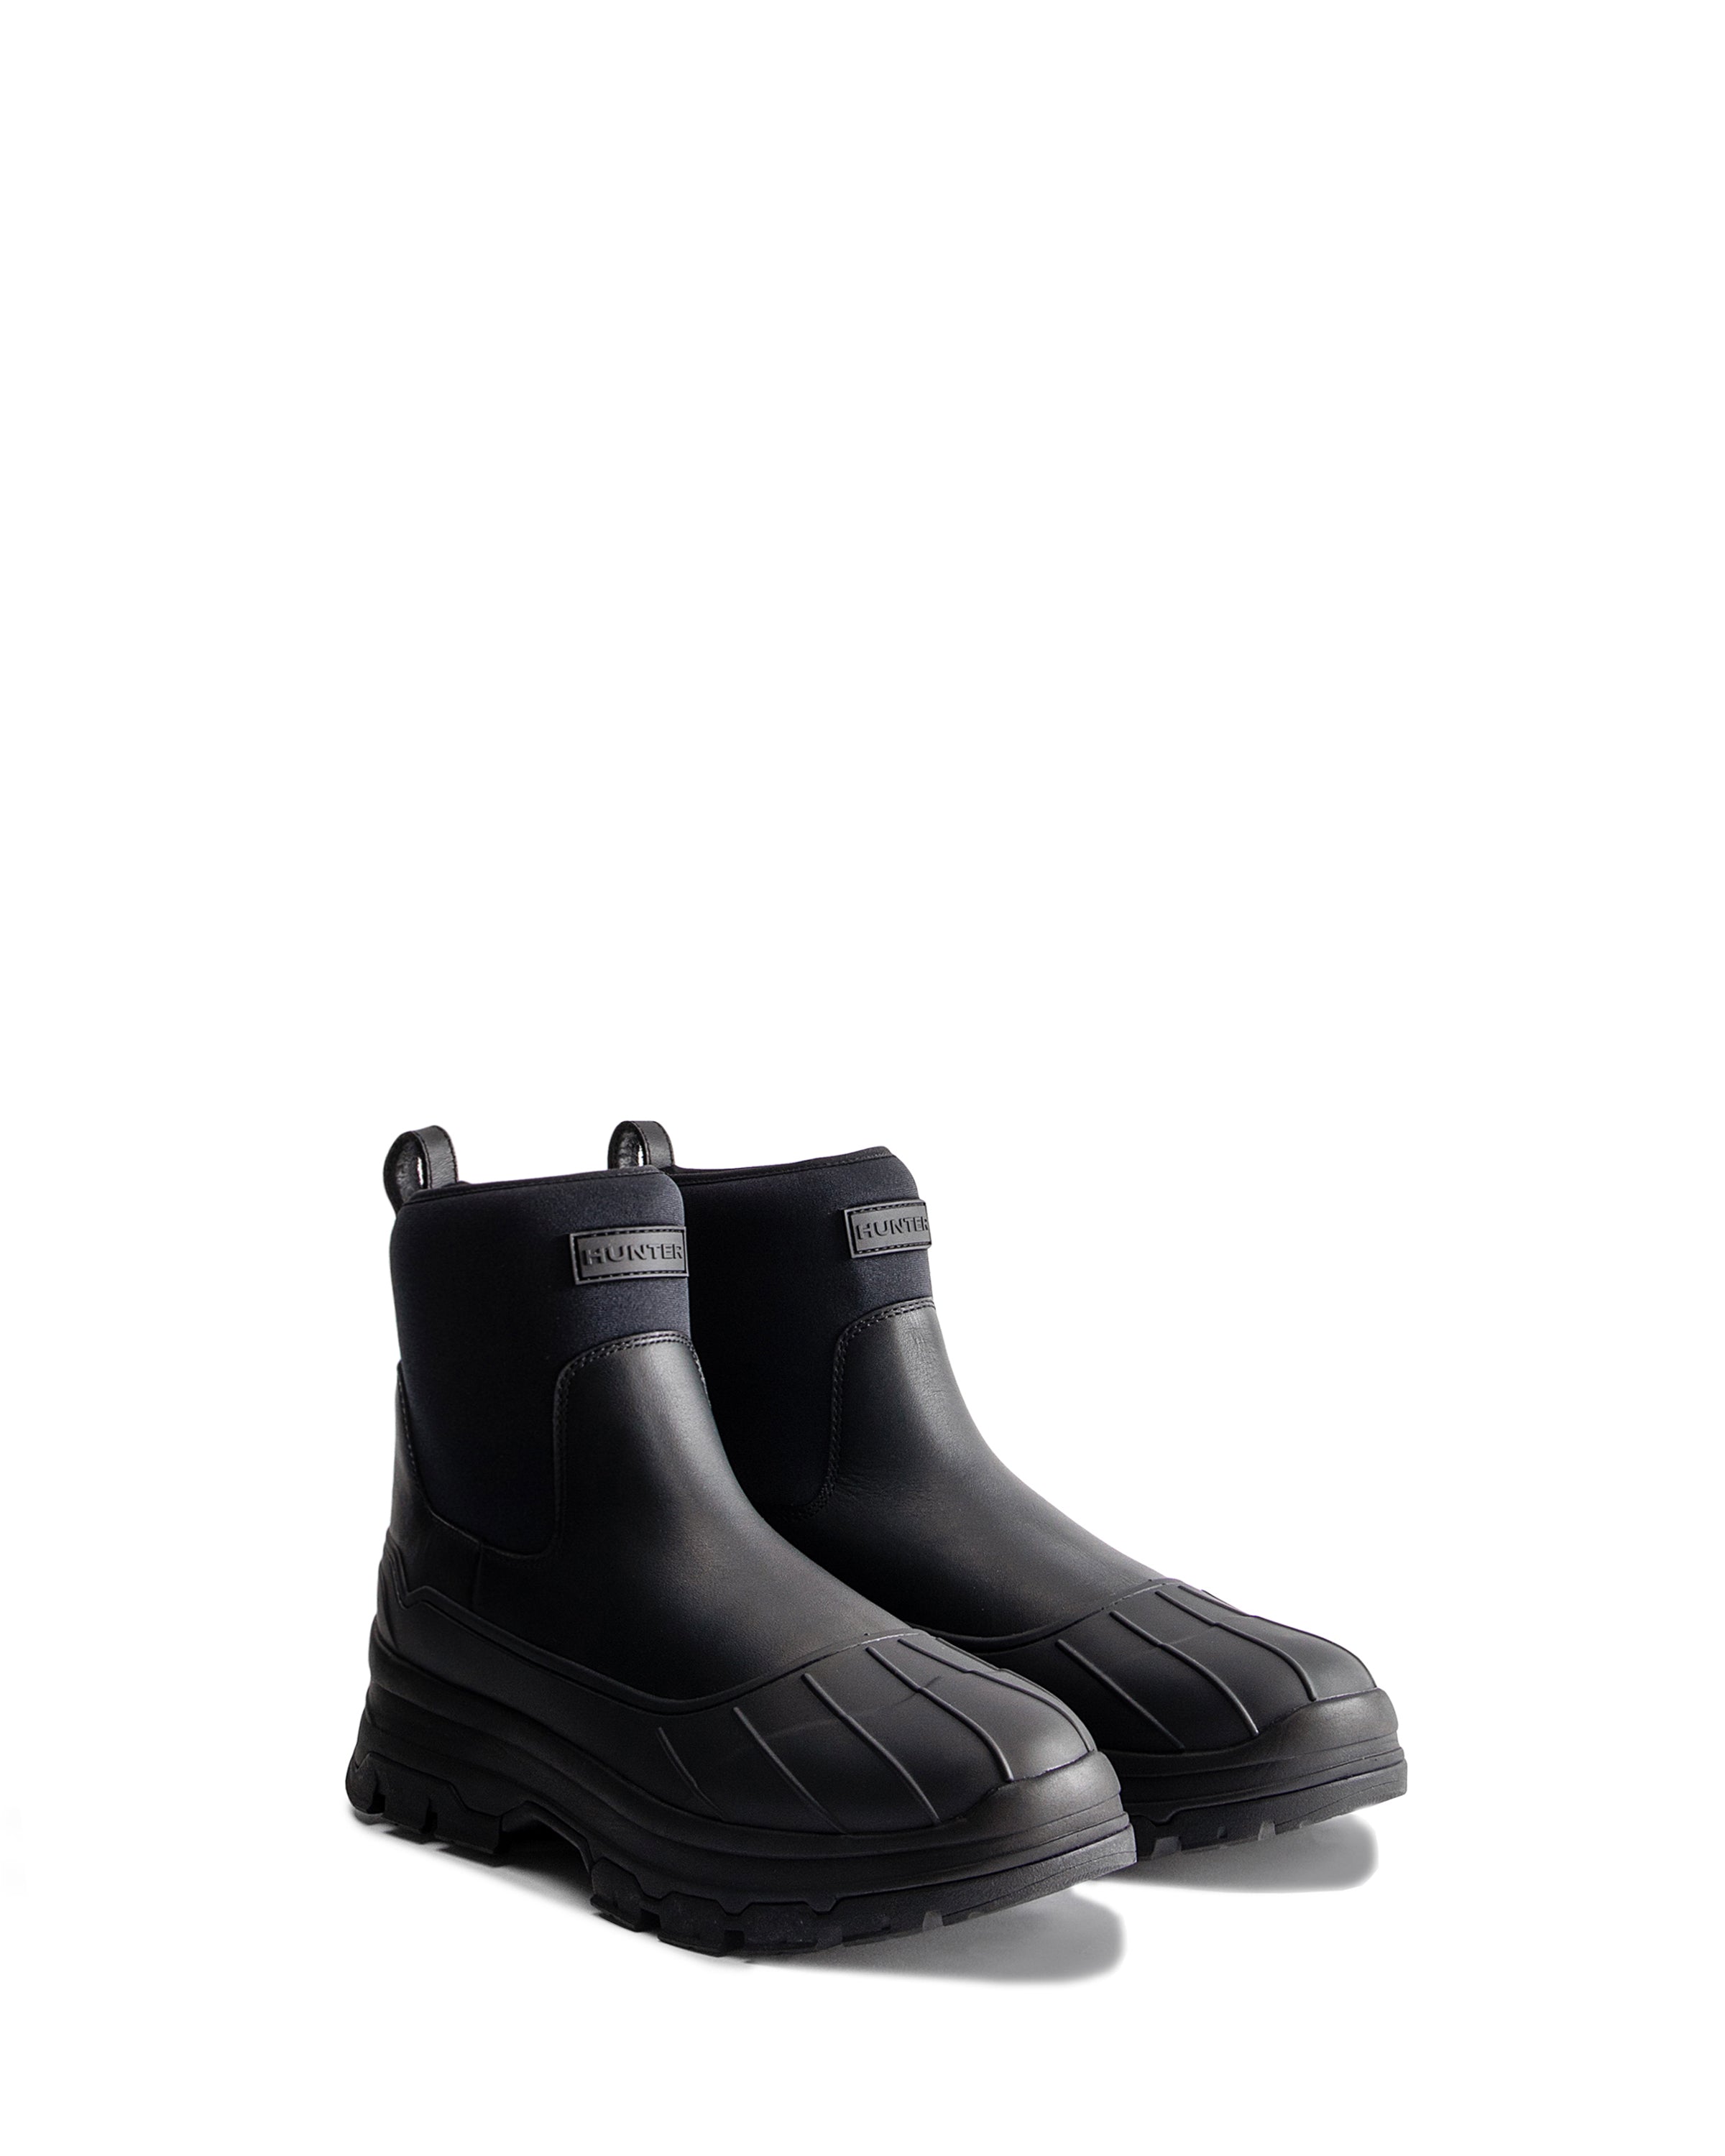 Men's City Explorer Boots - Black